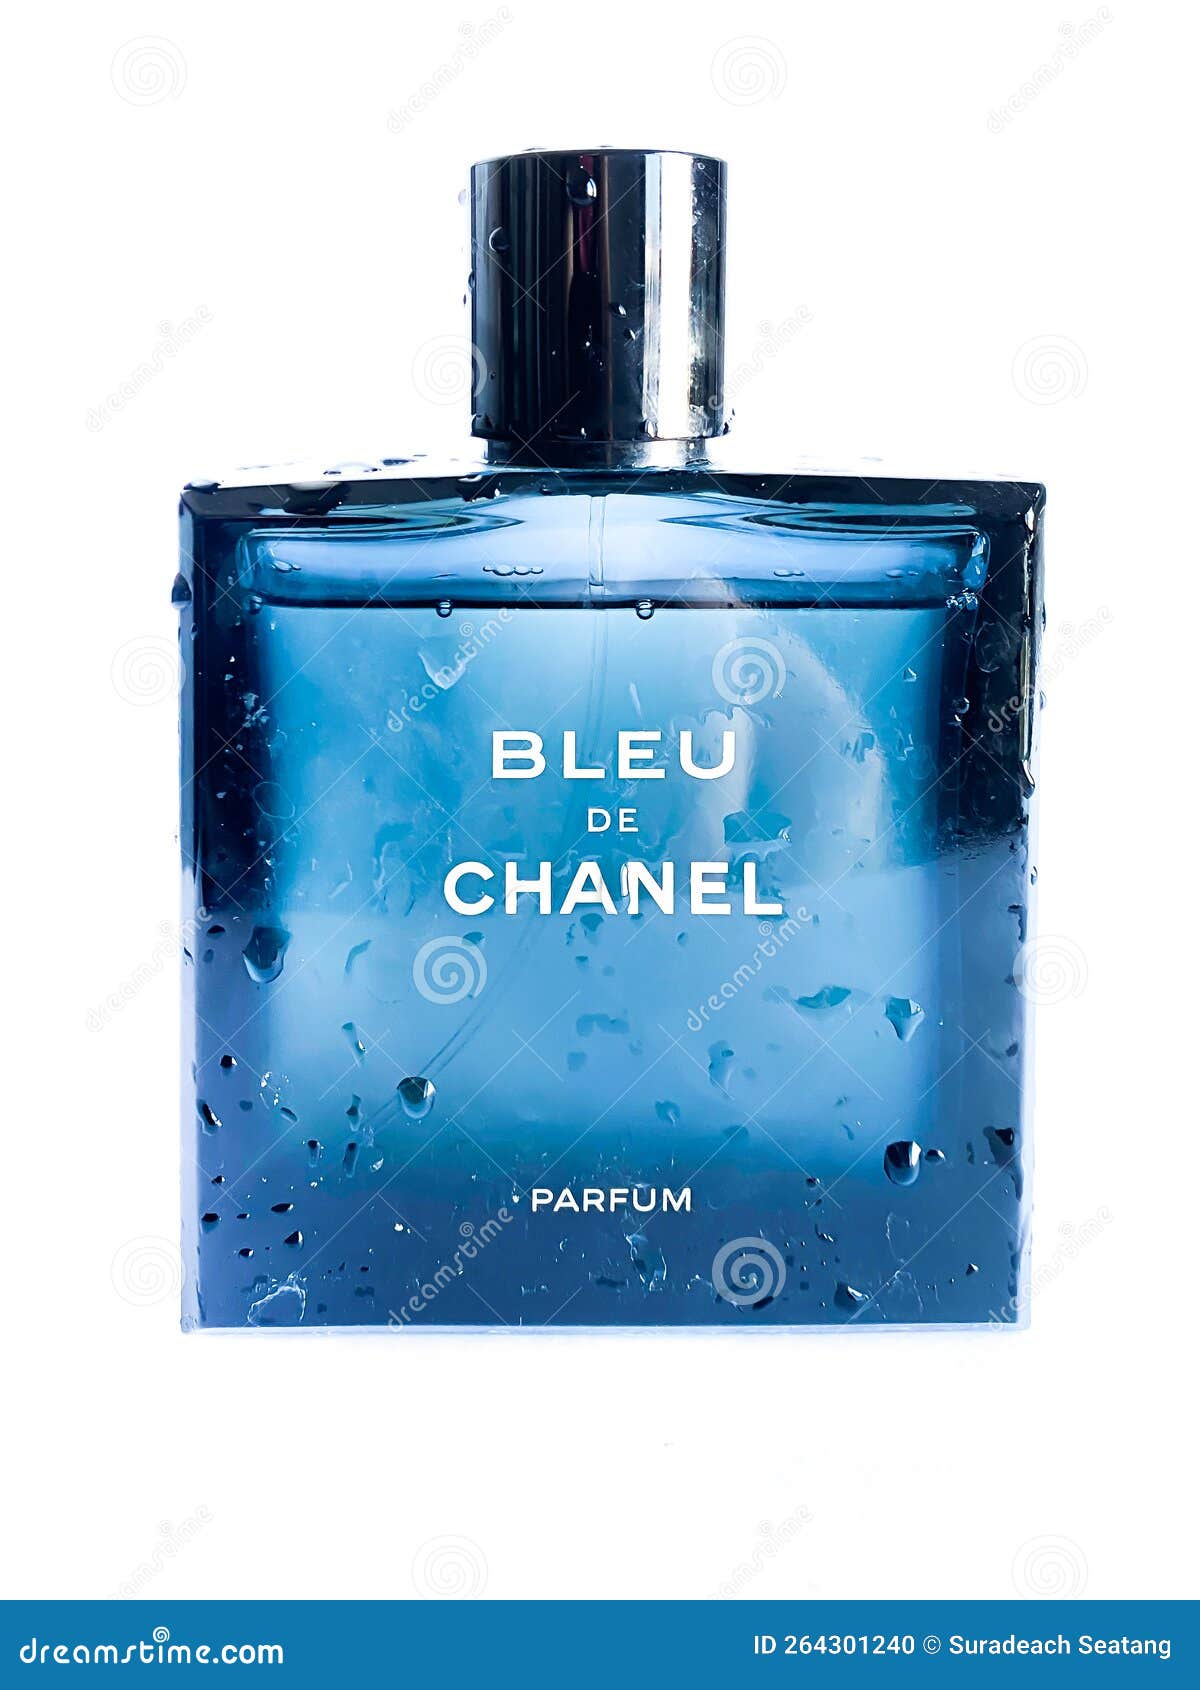 A Bottle of Bleu De Chanel Perfume Editorial Image - Image of